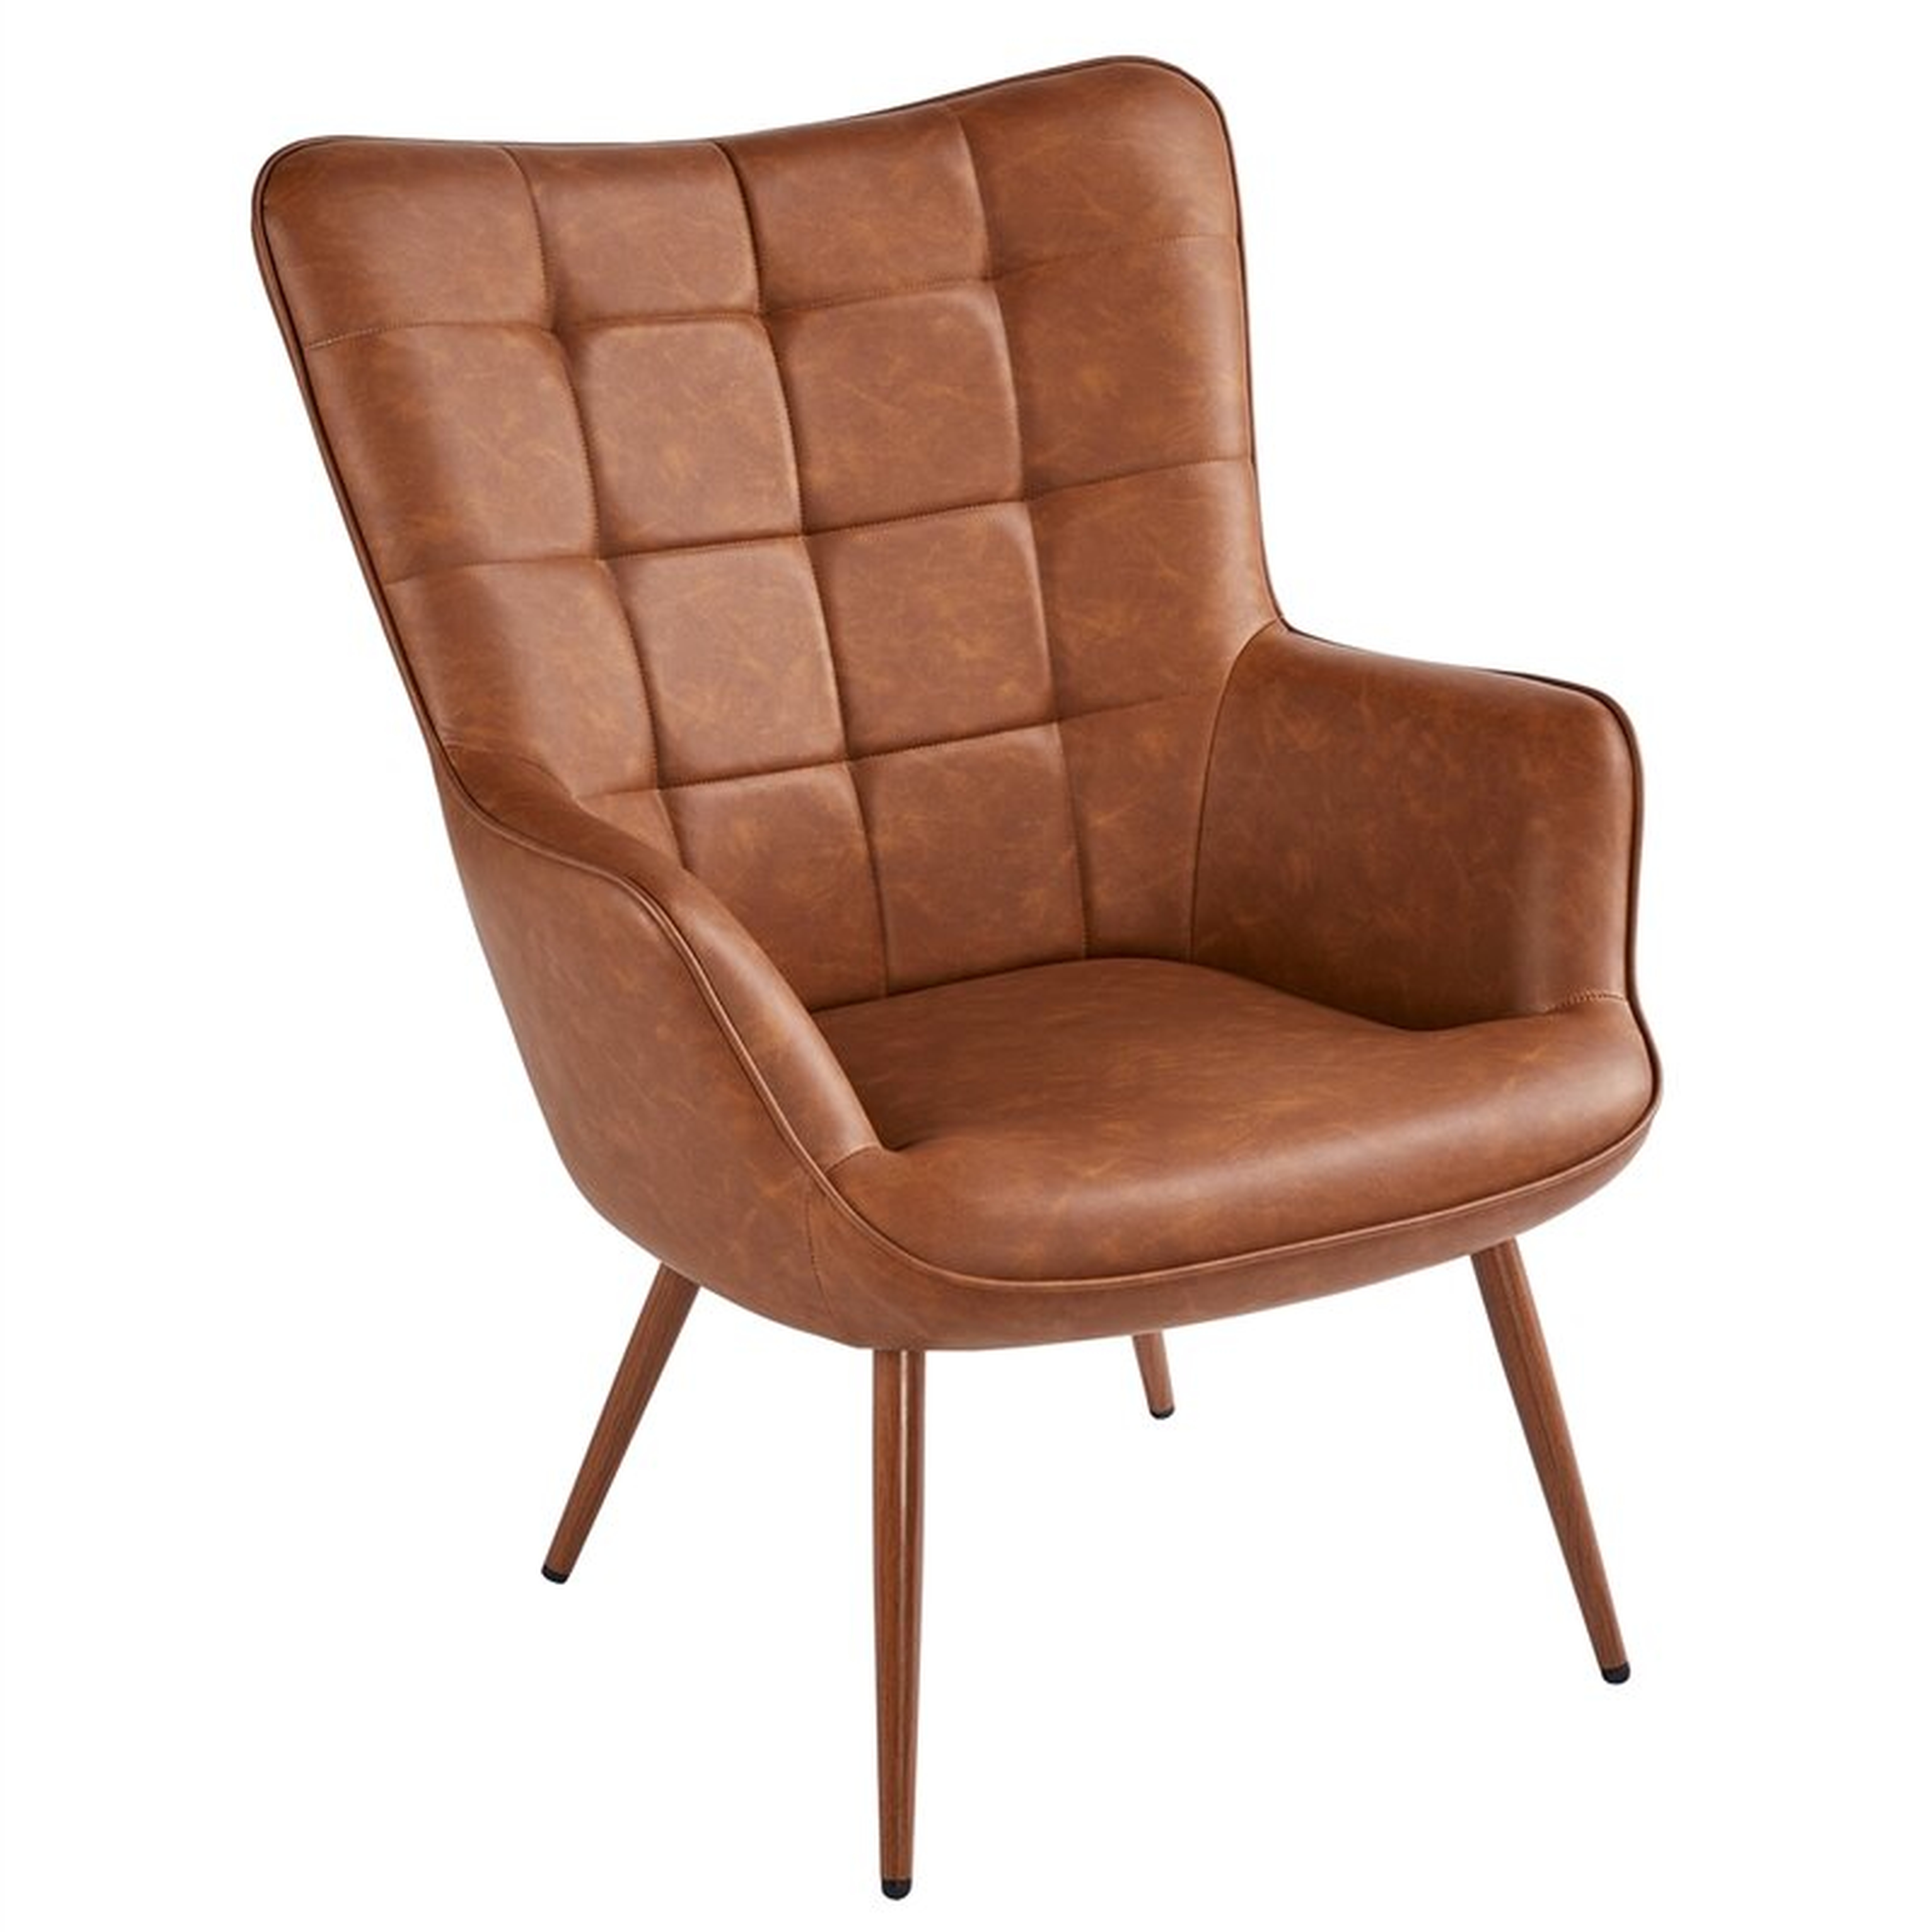 Aichele Upholstered Wingback Chair - Wayfair